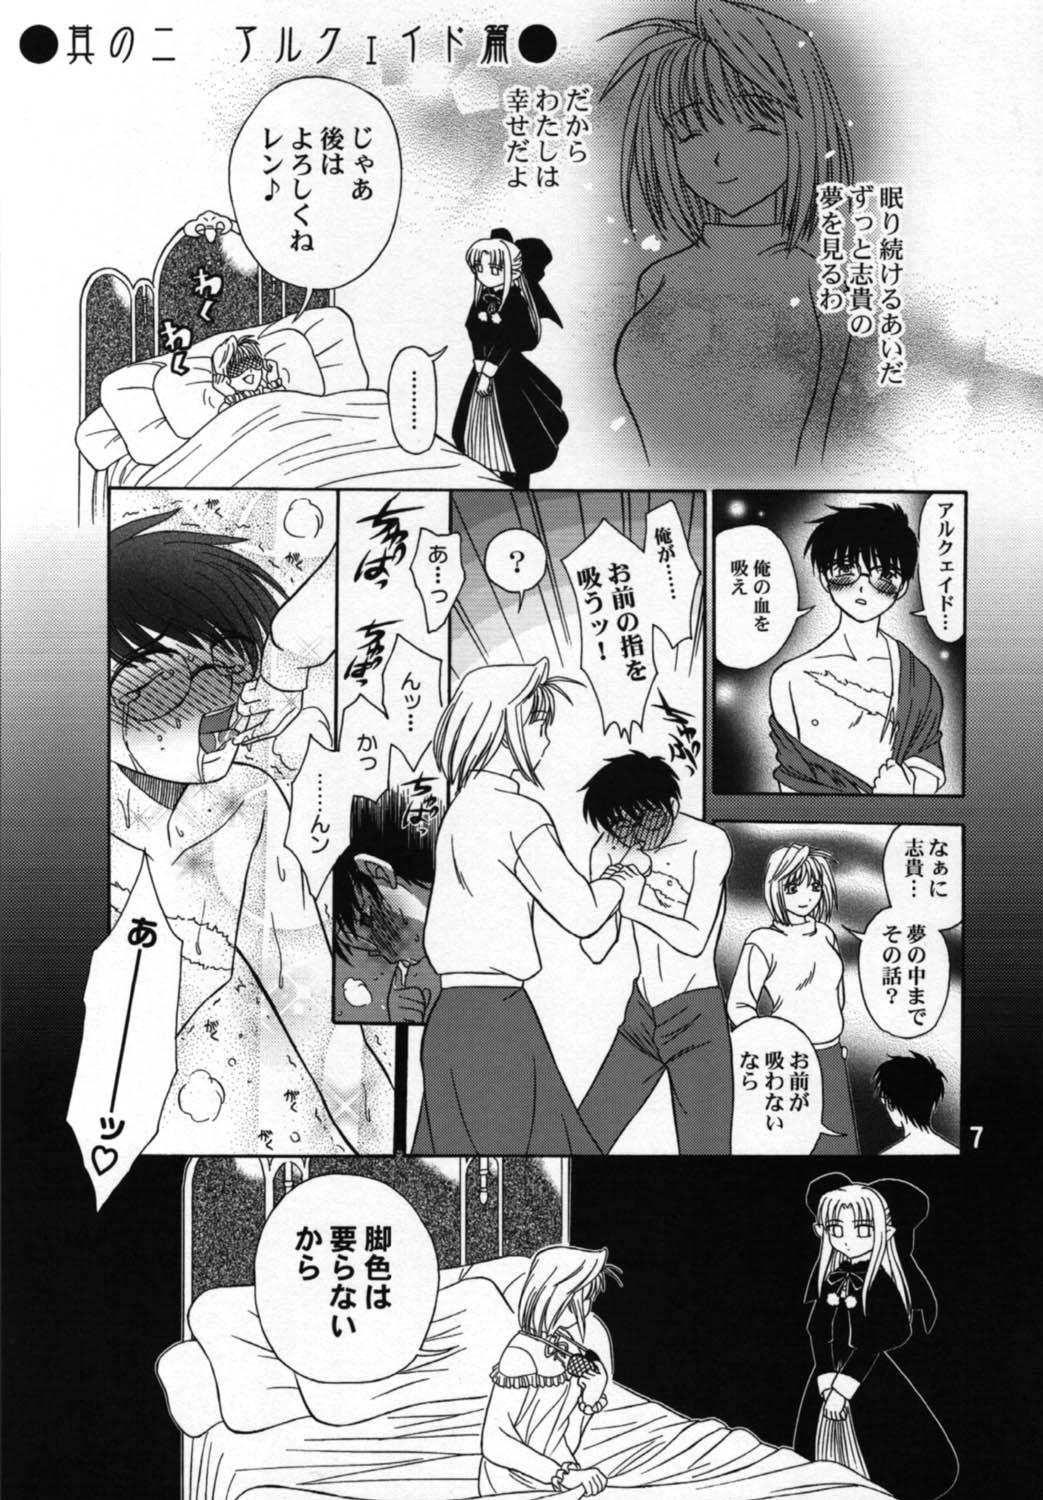 Foreplay Yubihime - Tsukihime Nice - Page 6